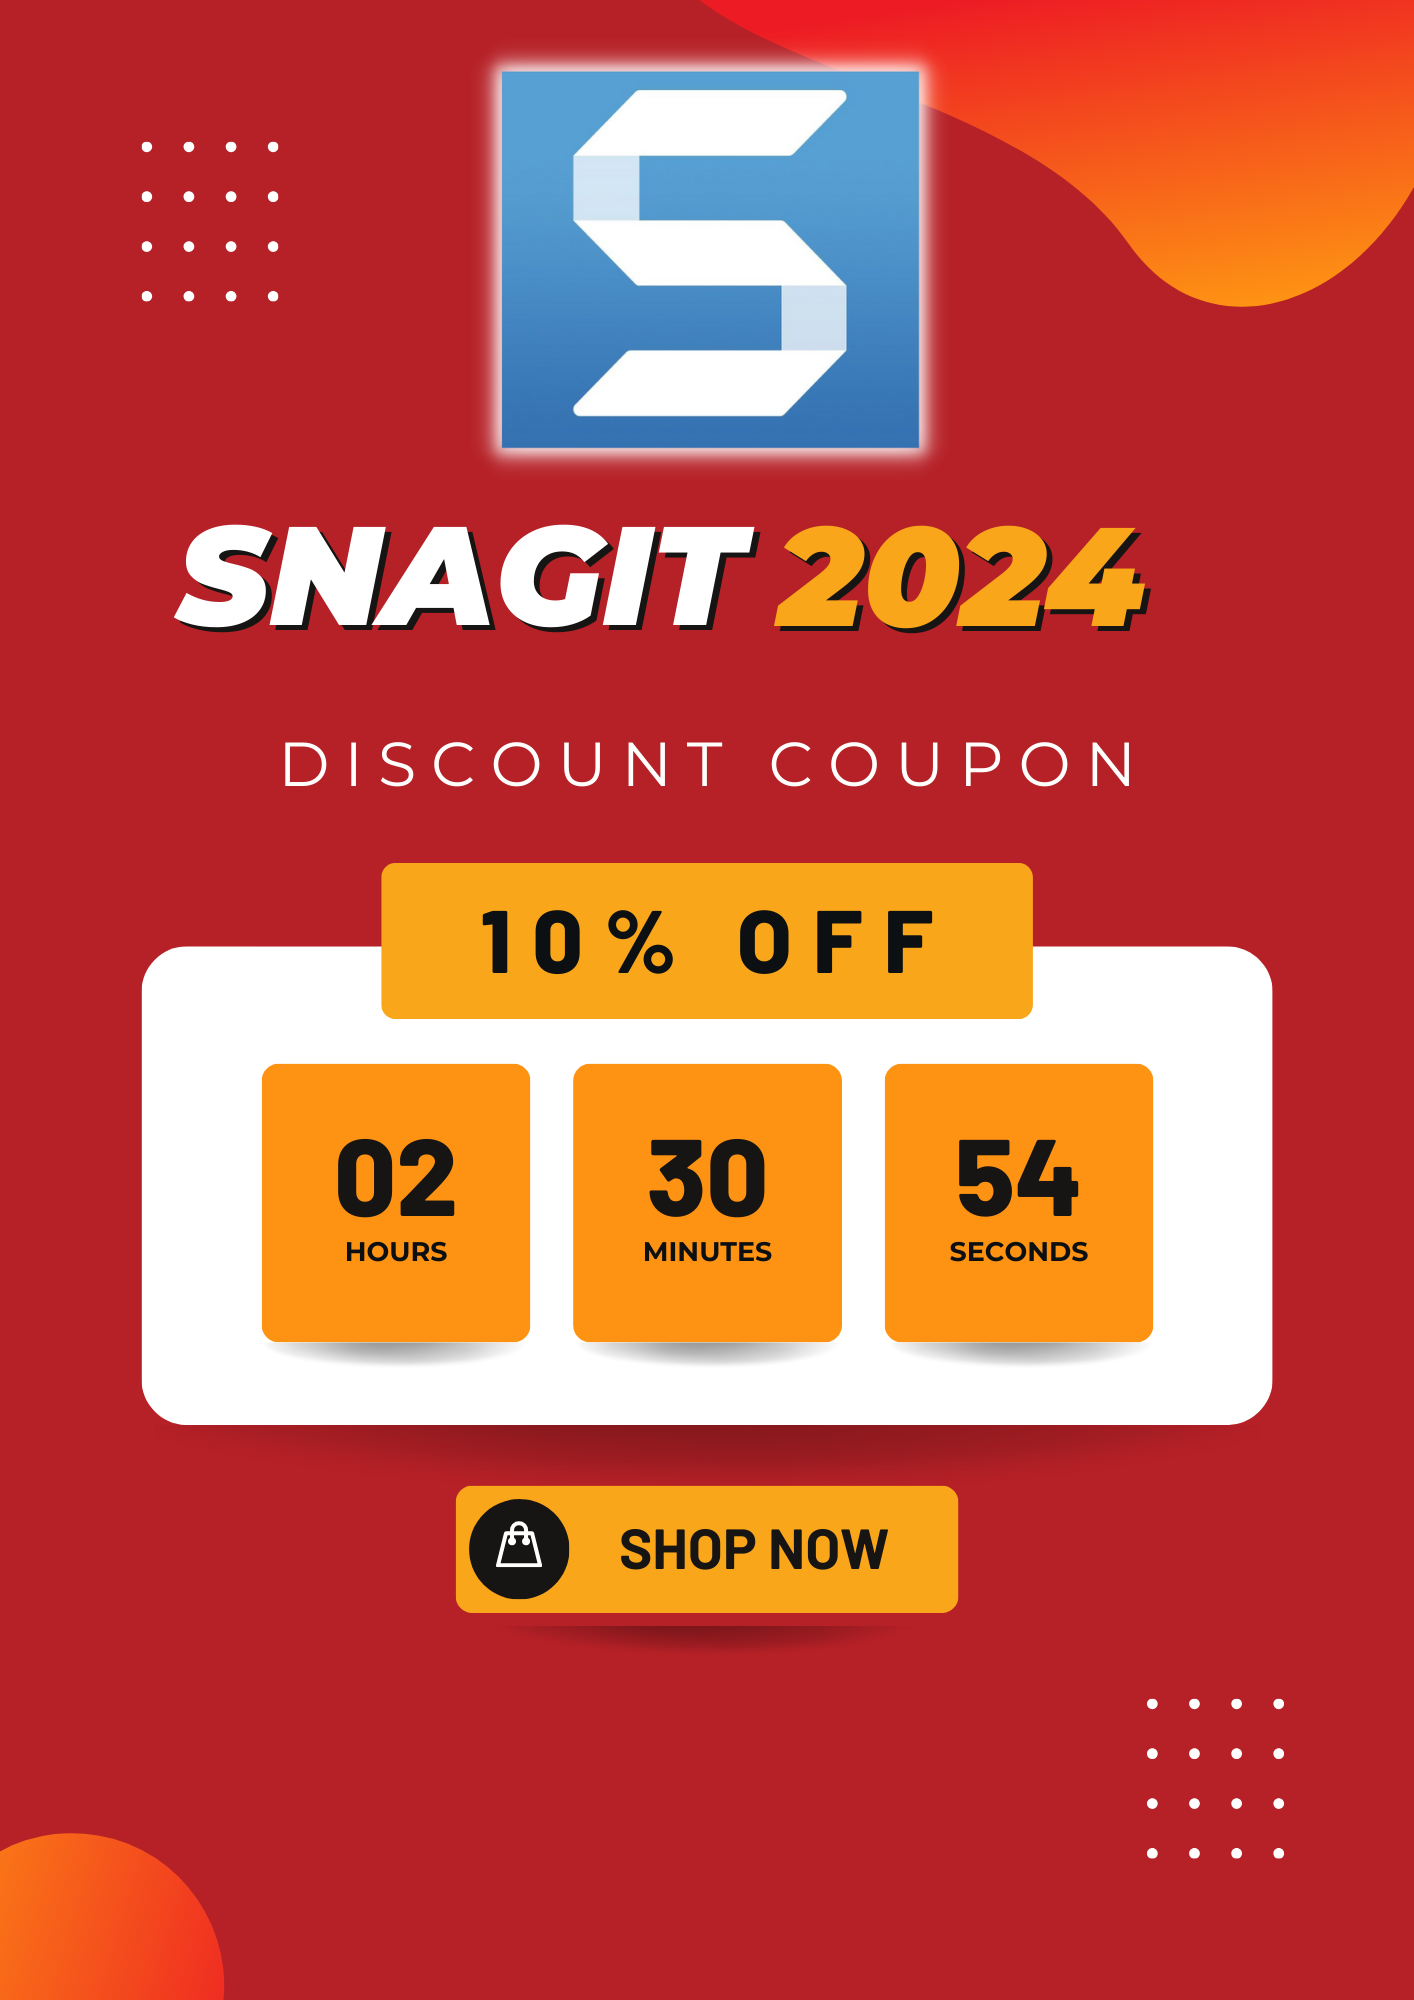 10% Off Snagit 2024 Discount Coupon Code